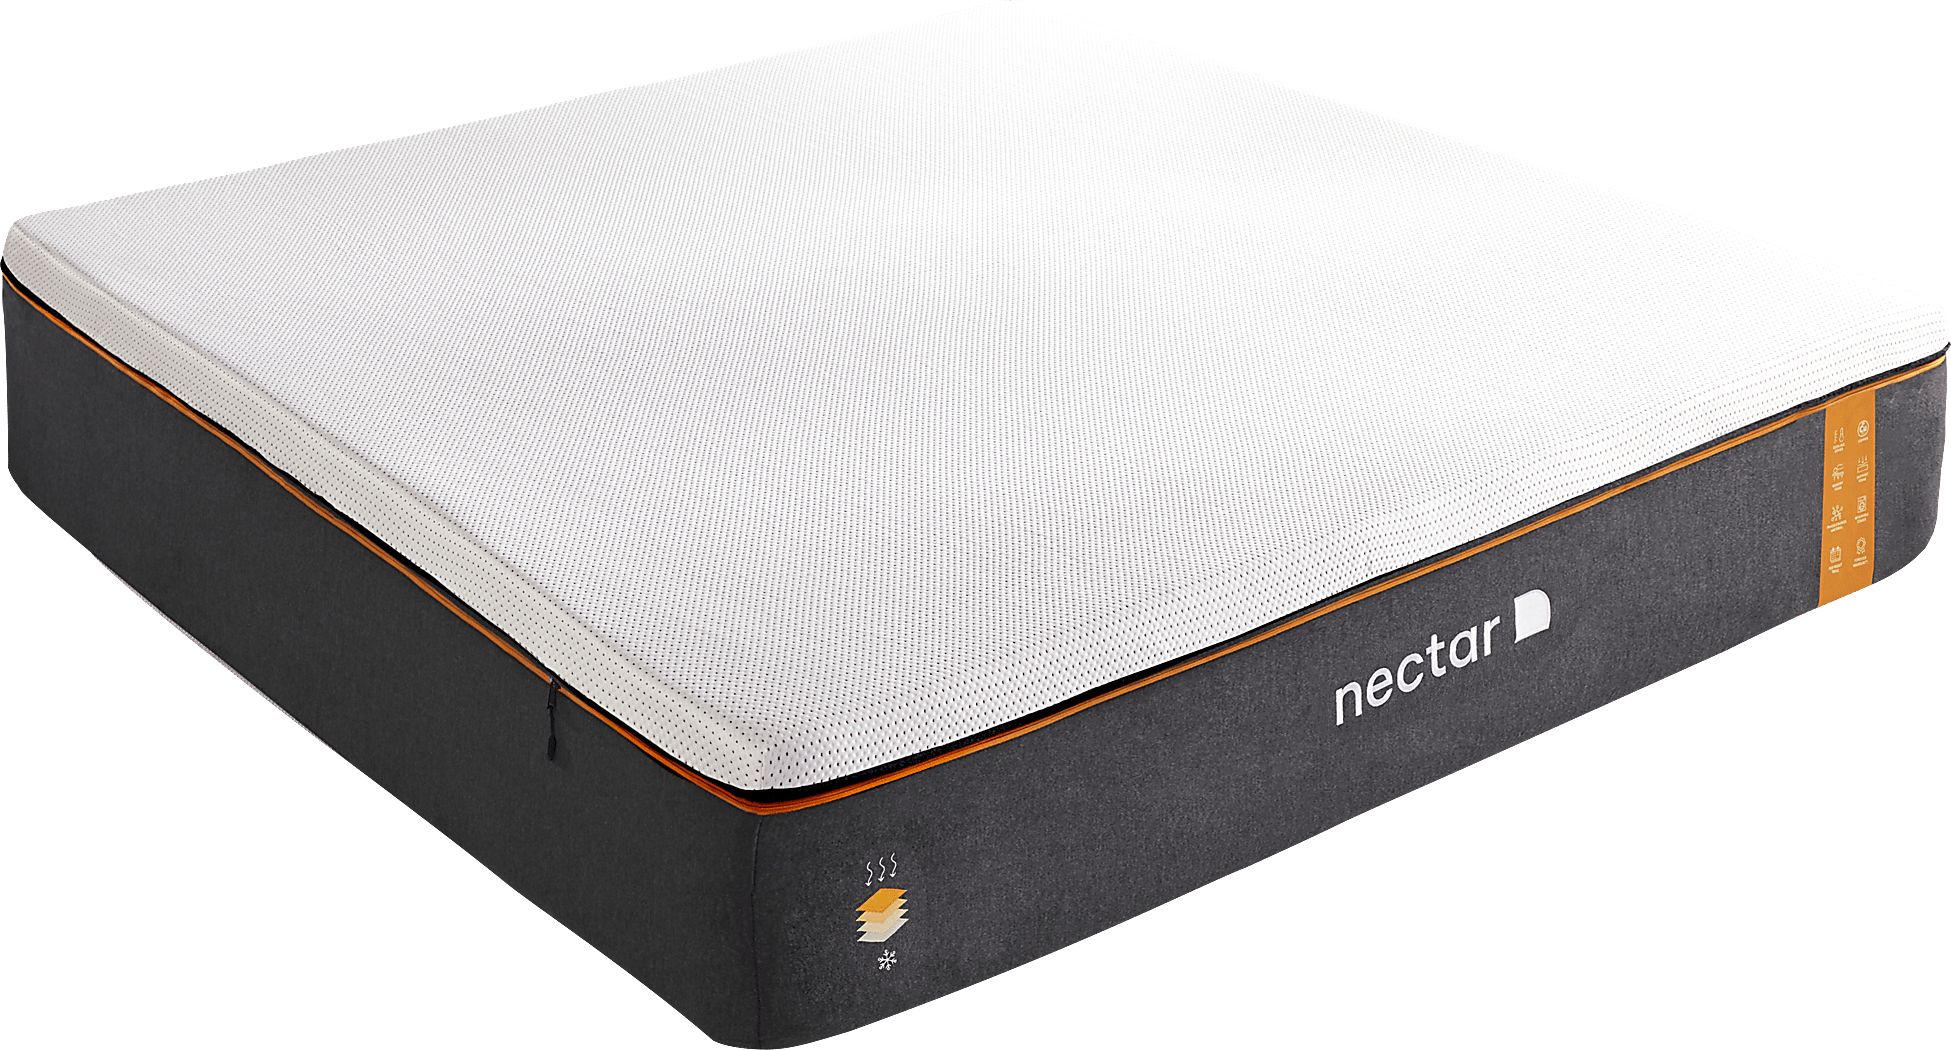 nectar king size mattress reviews